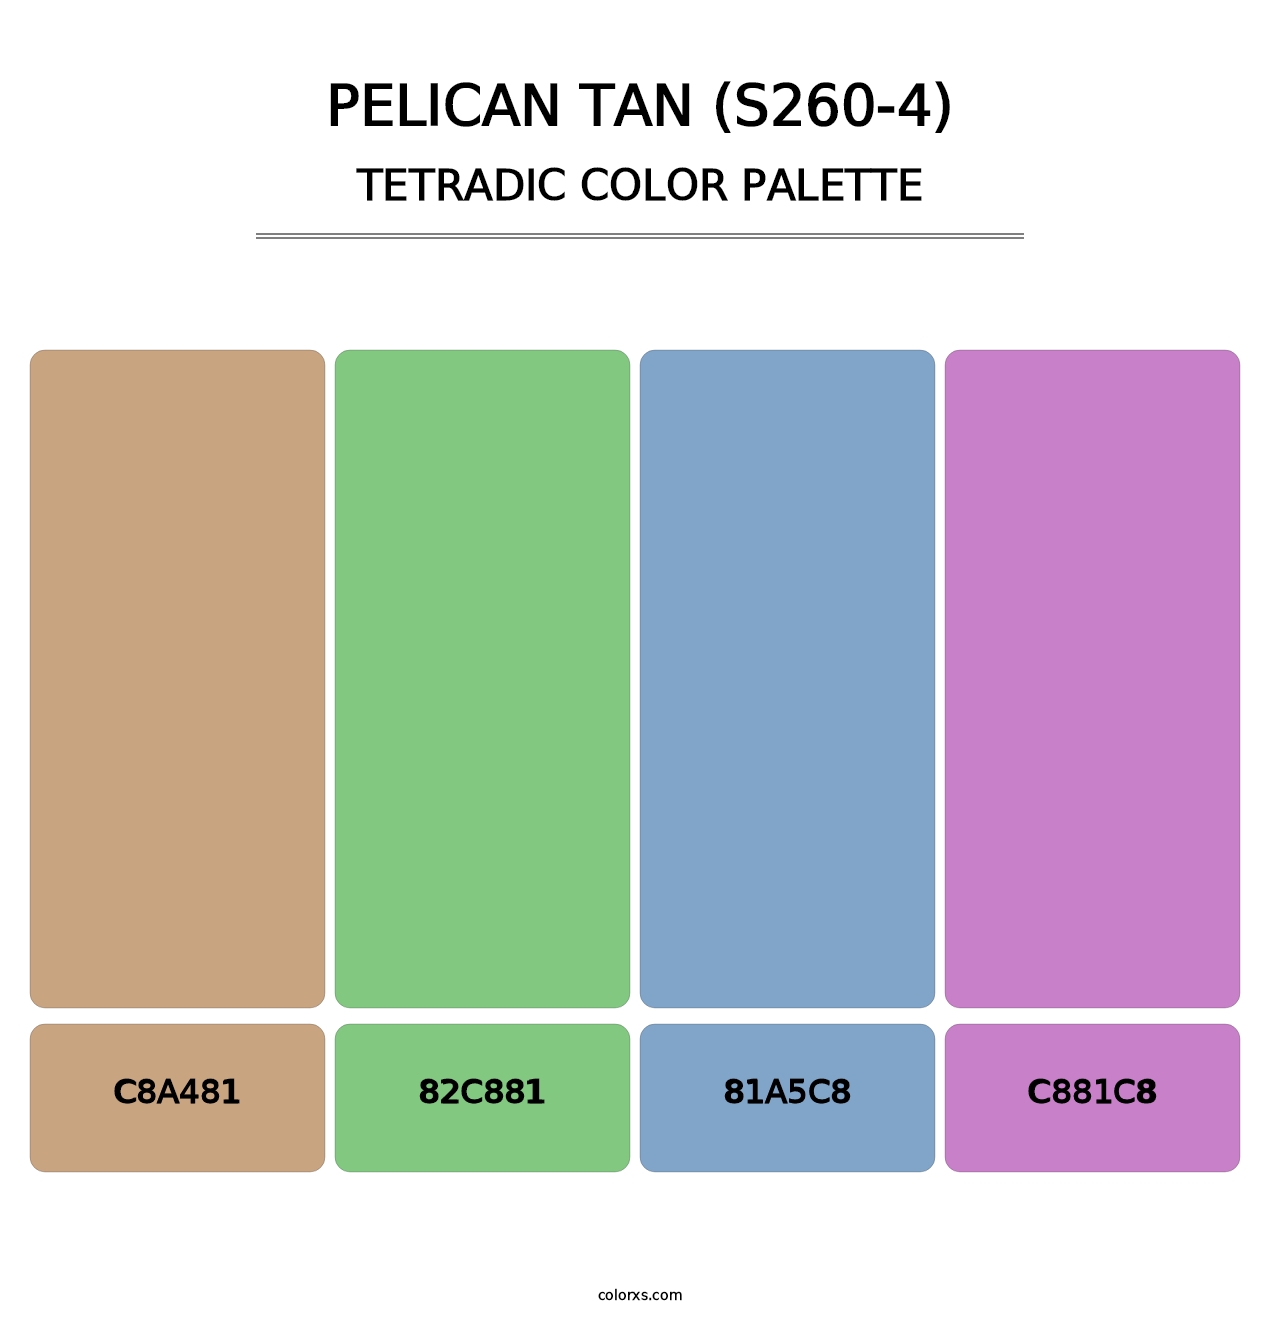 Pelican Tan (S260-4) - Tetradic Color Palette